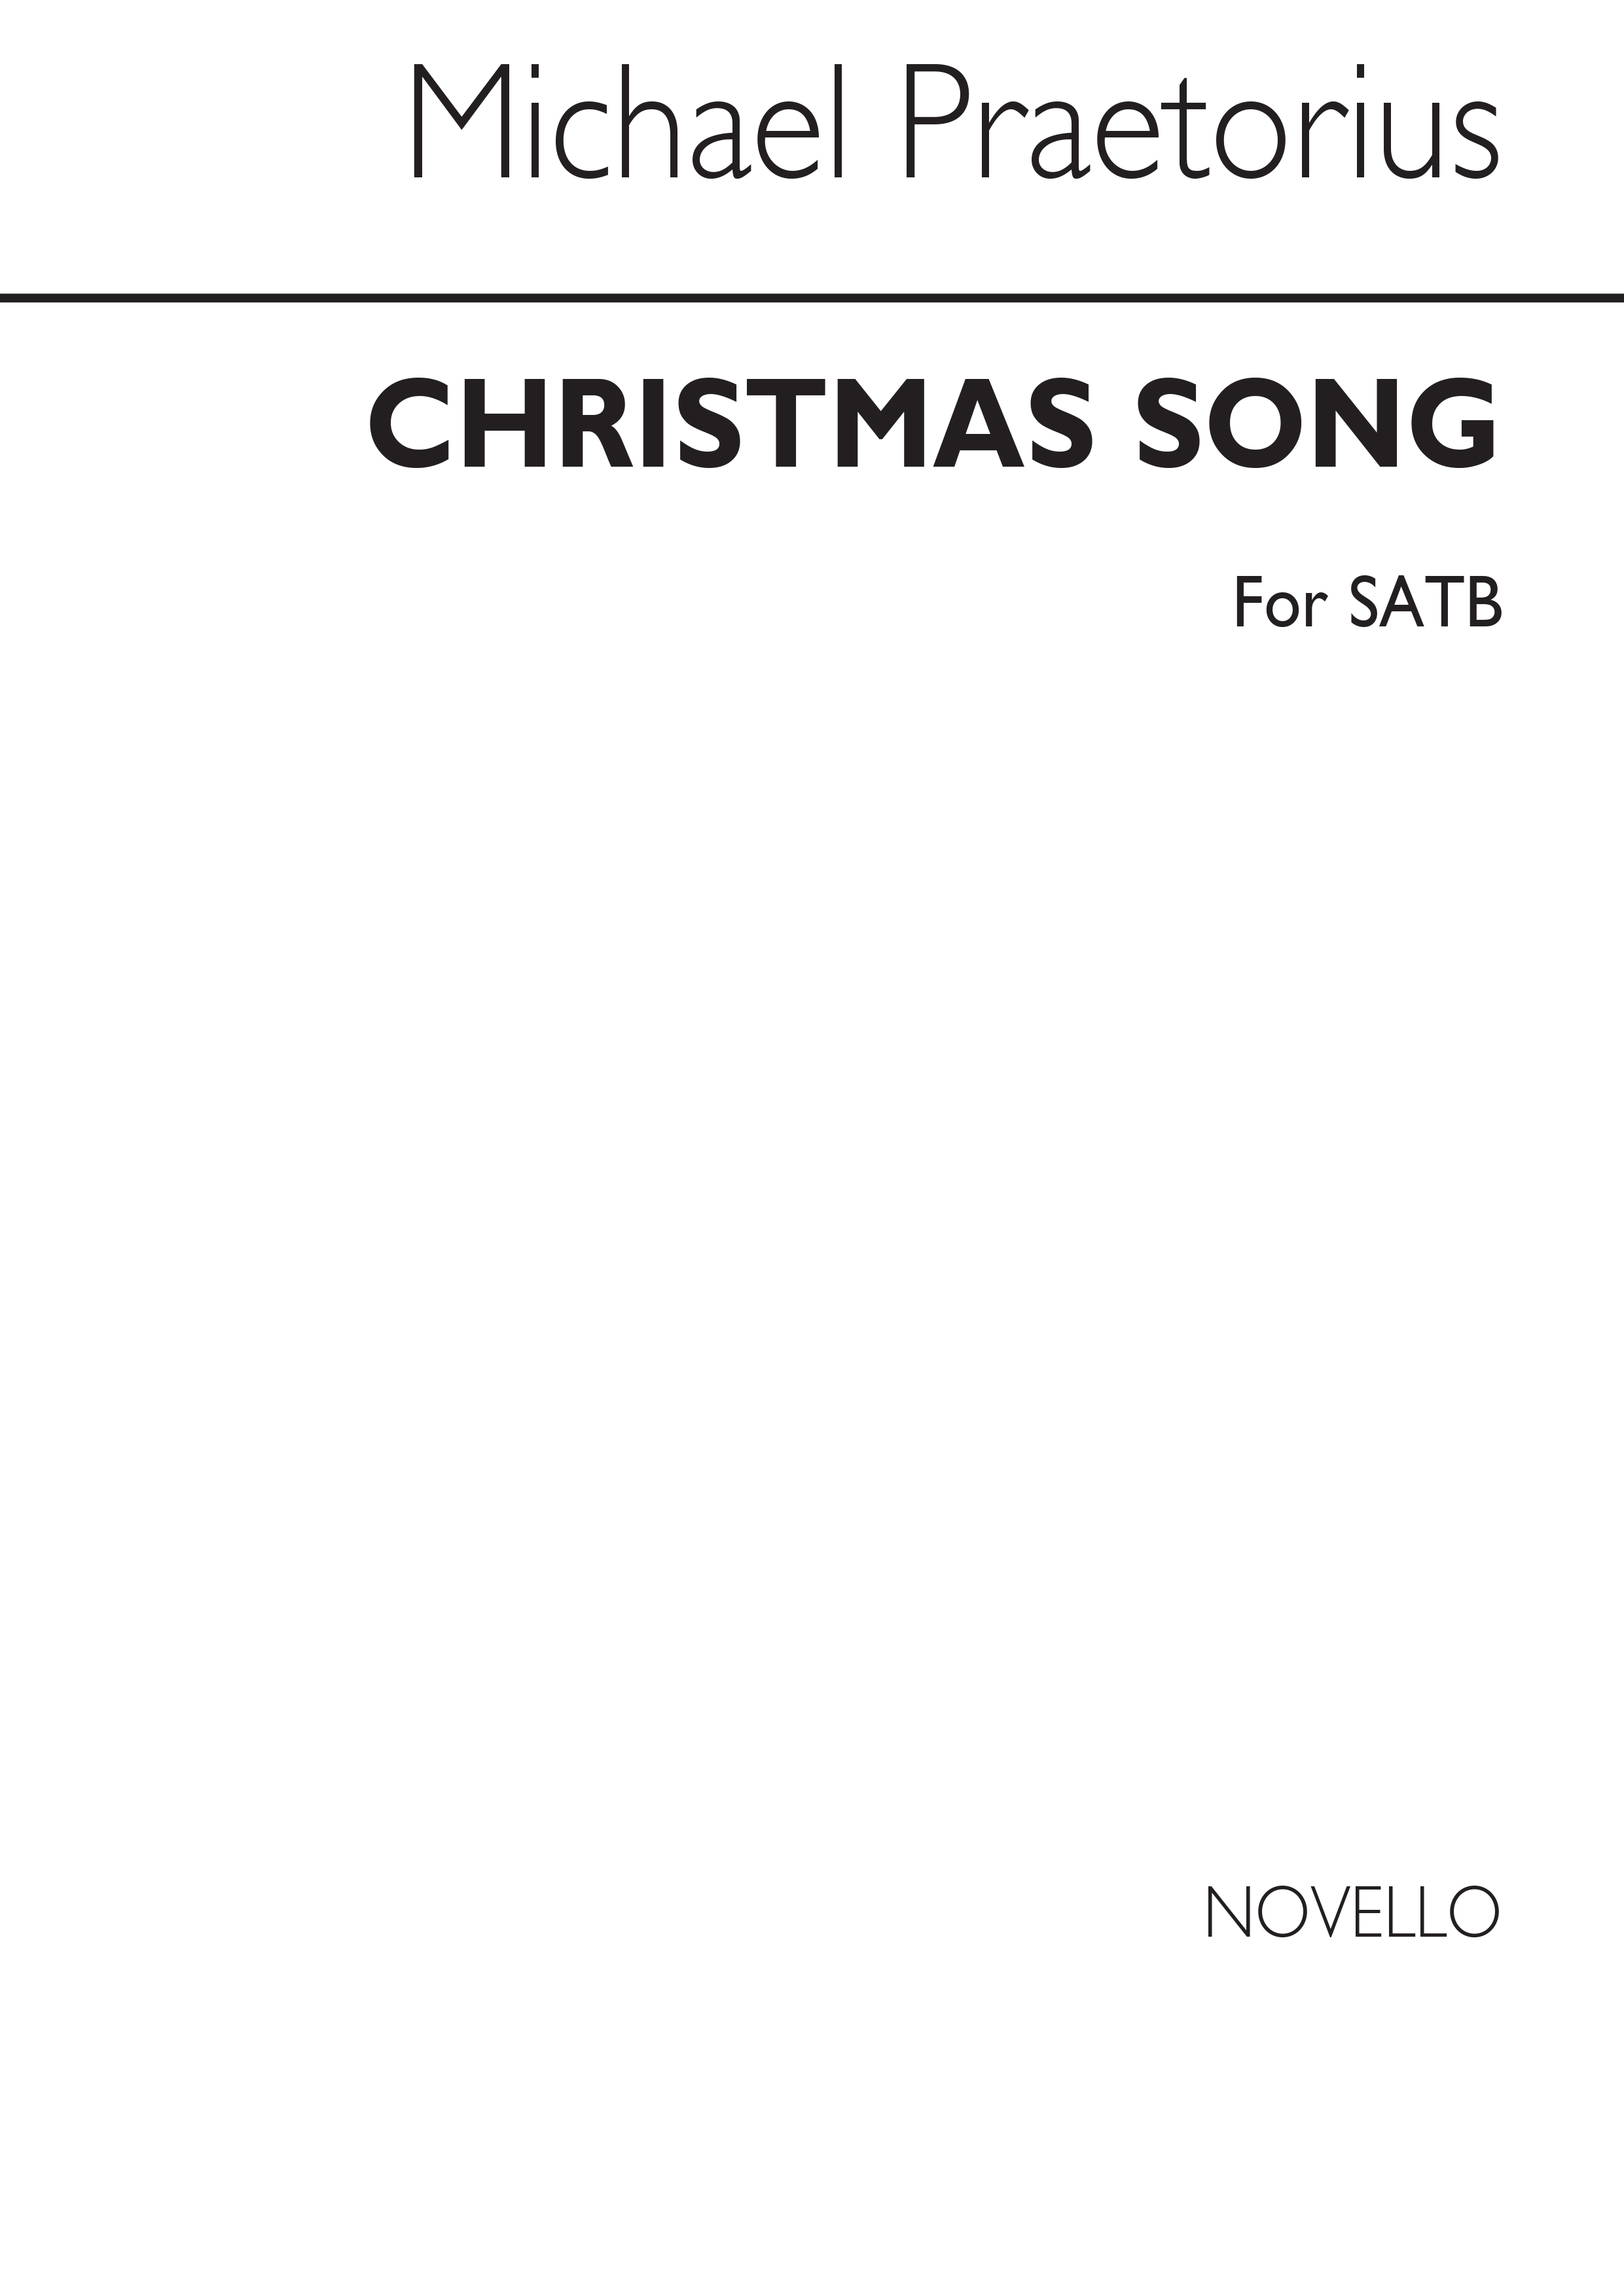 Praetorius Christmas Song Satb